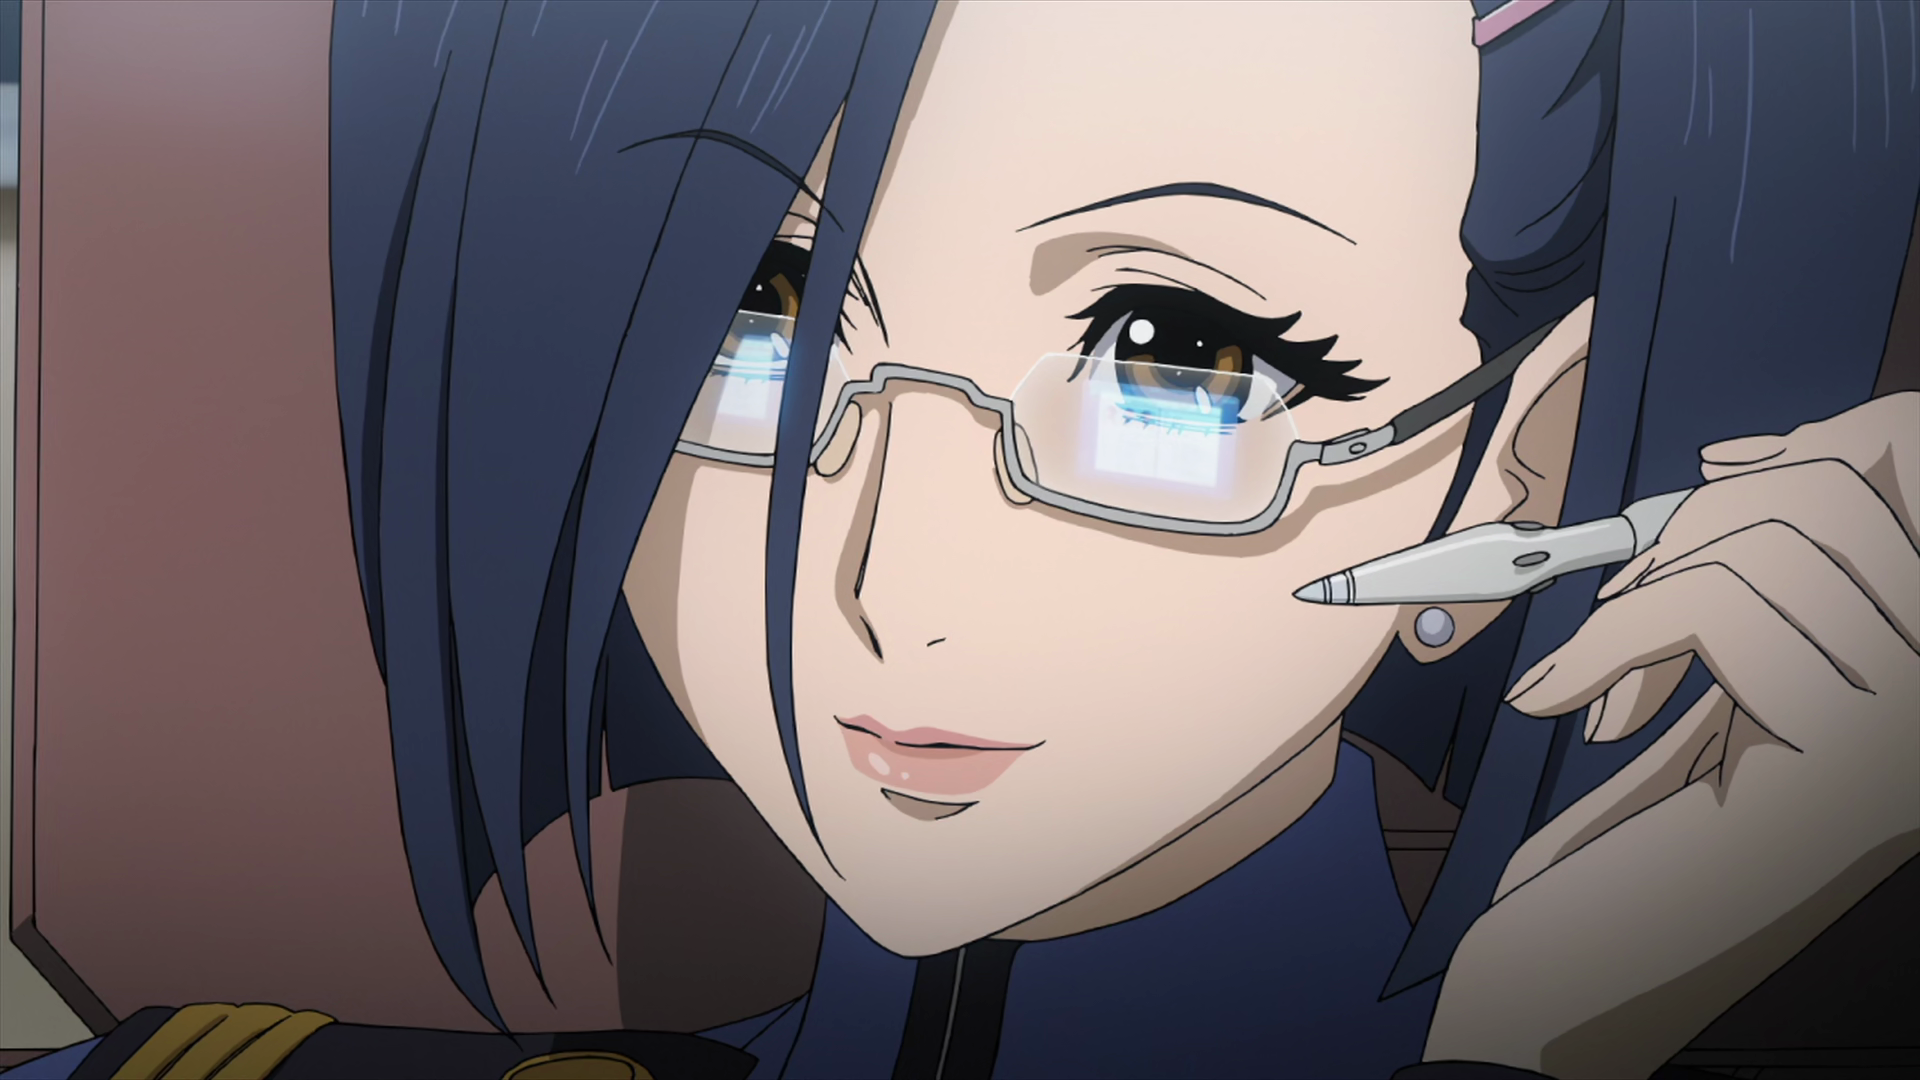 Anime 1920x1080 Space Battleship Yamato 2199 blue hair Anime screenshot brown eyes glasses smiling pens Kaoru Niimi earring anime anime girls ear piercing short hair